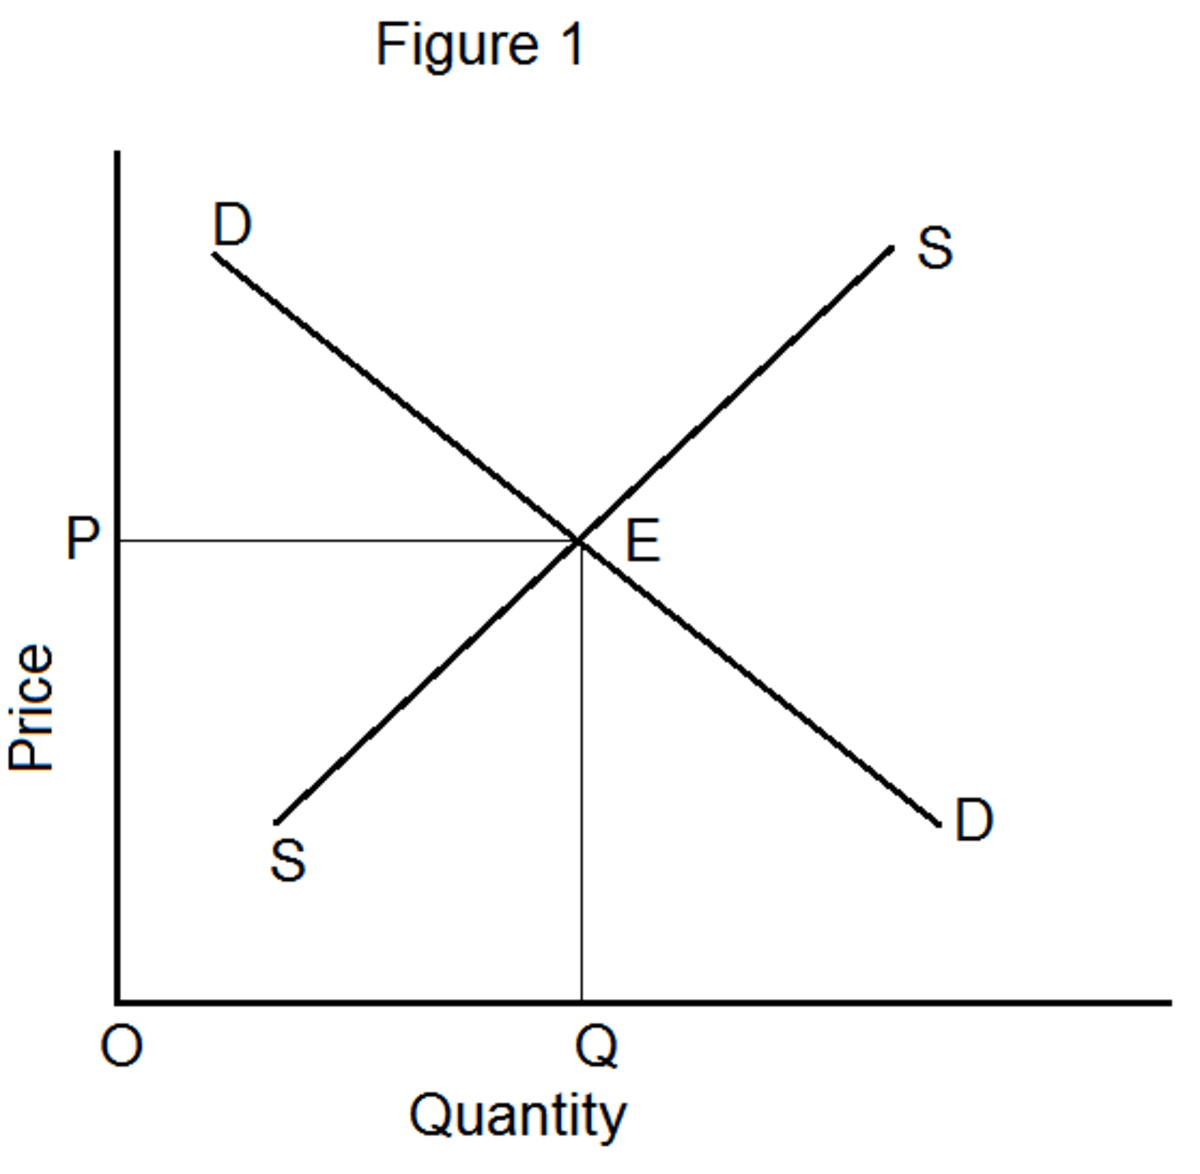 Determination of Equilibrium Price and Quantity Under Perfect Competition